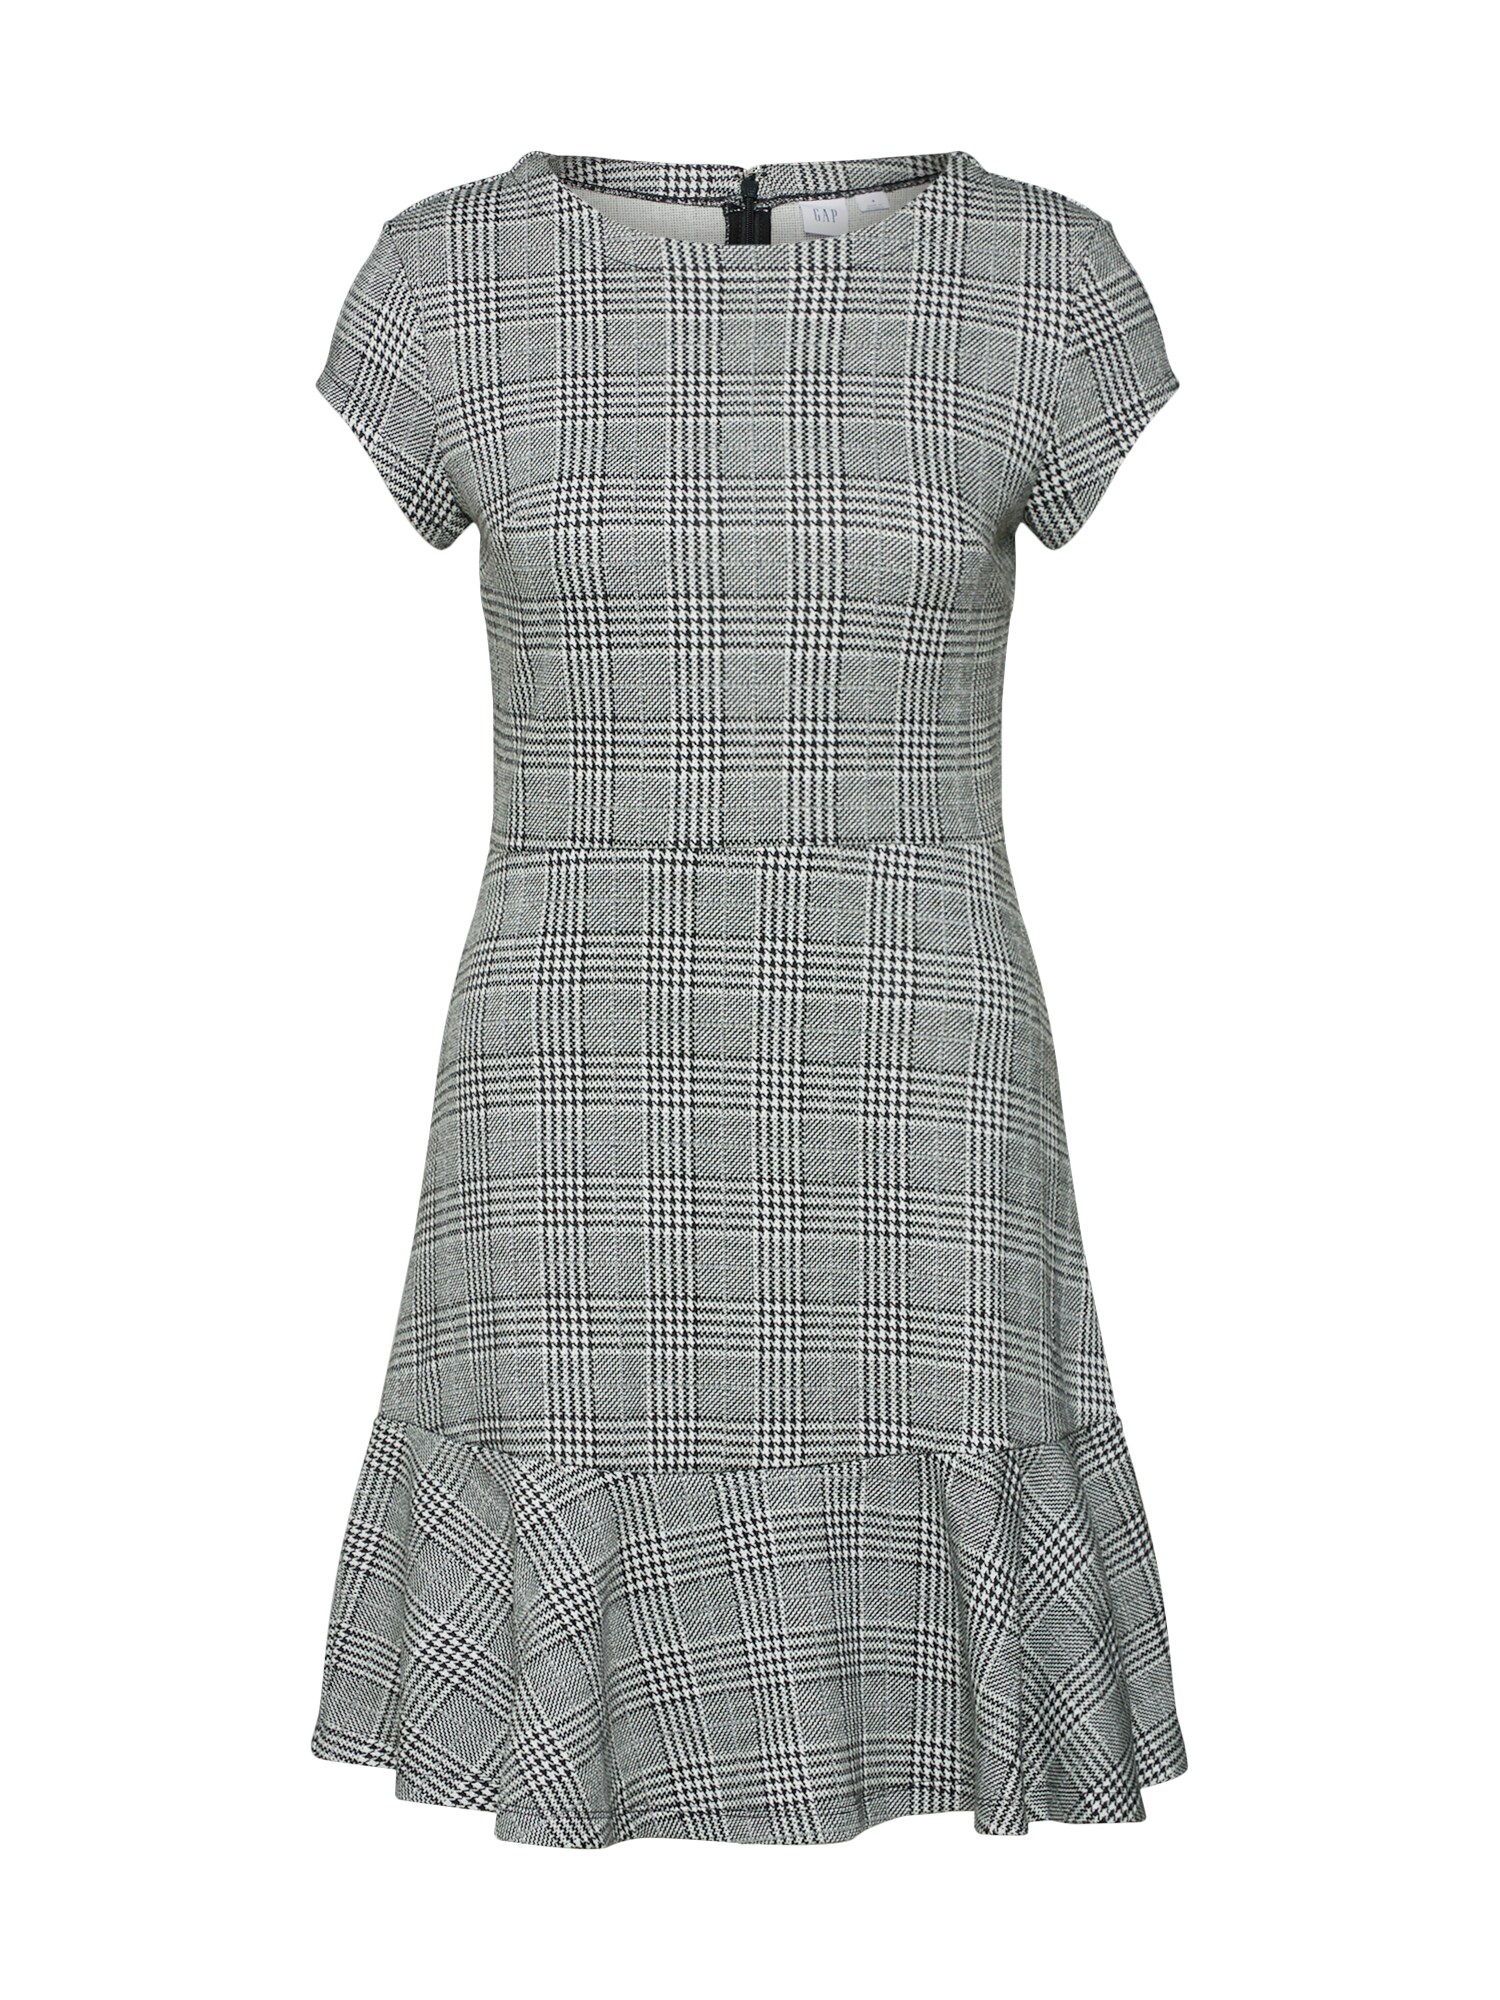 Gap Kleid Schwarz Schwarzes Kleid - t shirt template roblox magdalene projectorg